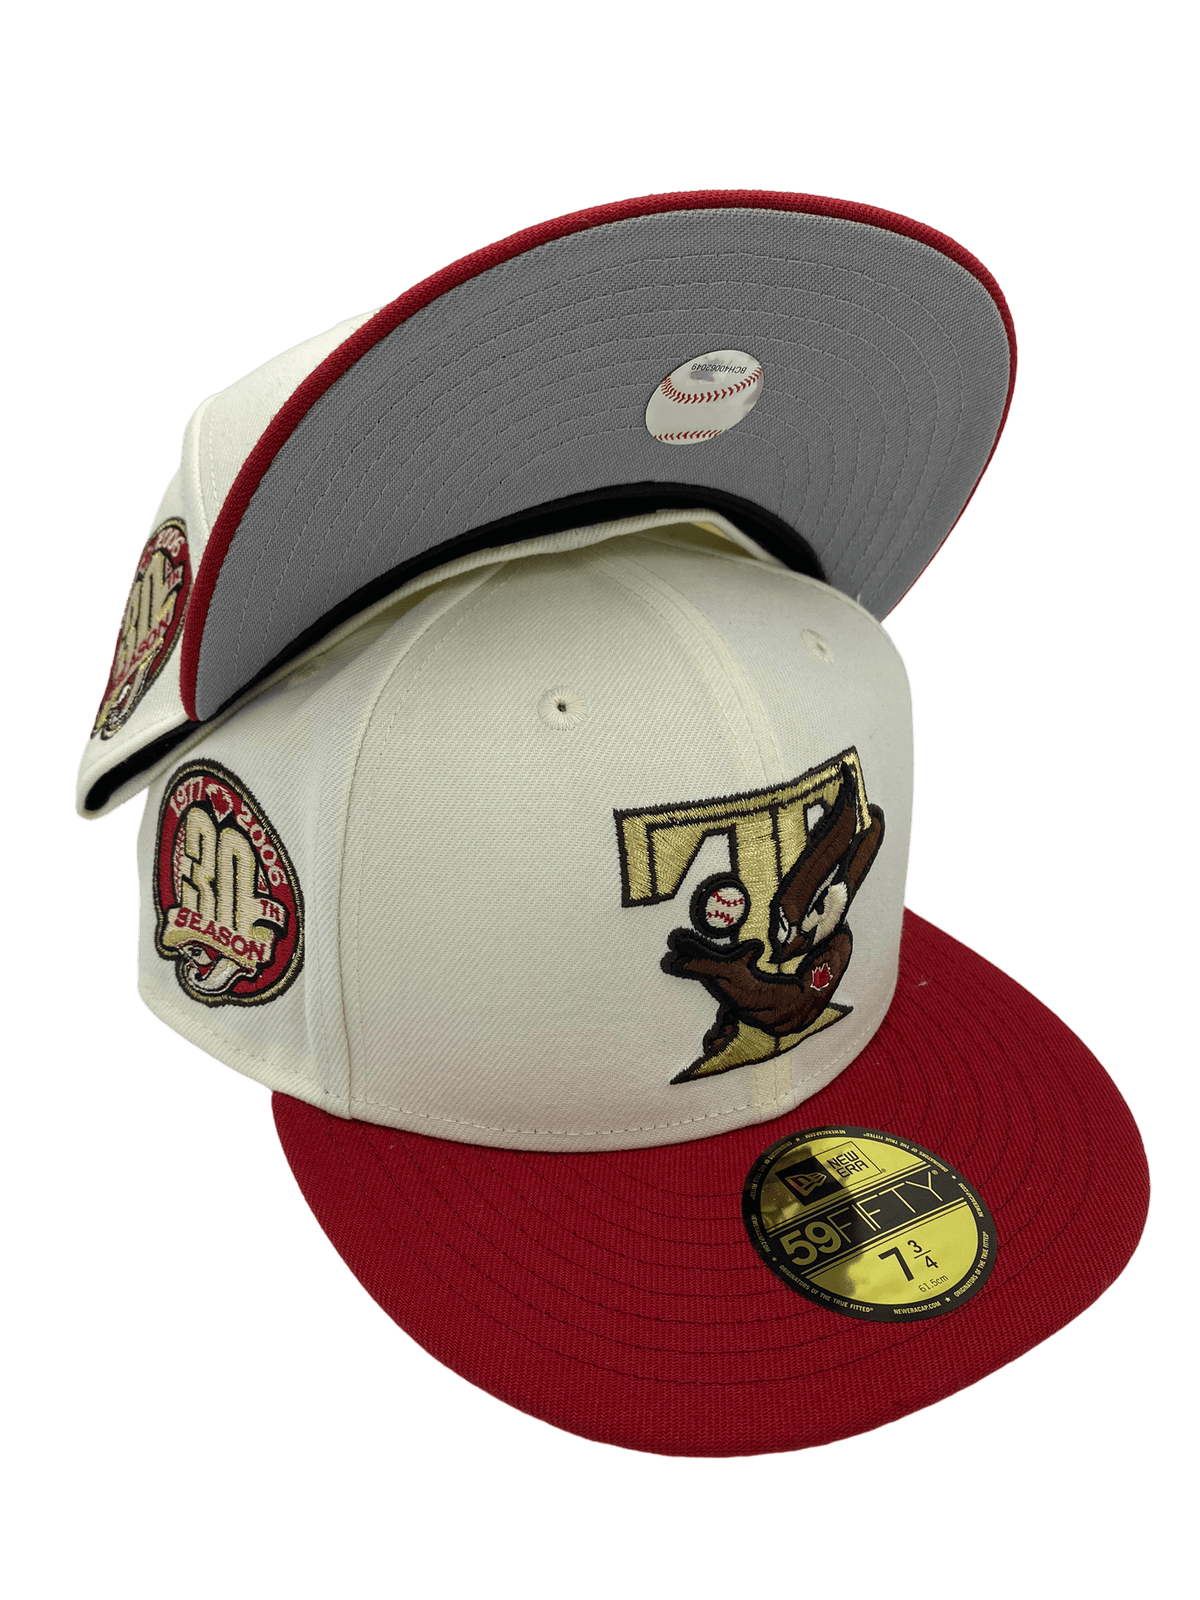 Toronto Blue Jays New Era Fitted 7 1/2 Baseball Cap Hat